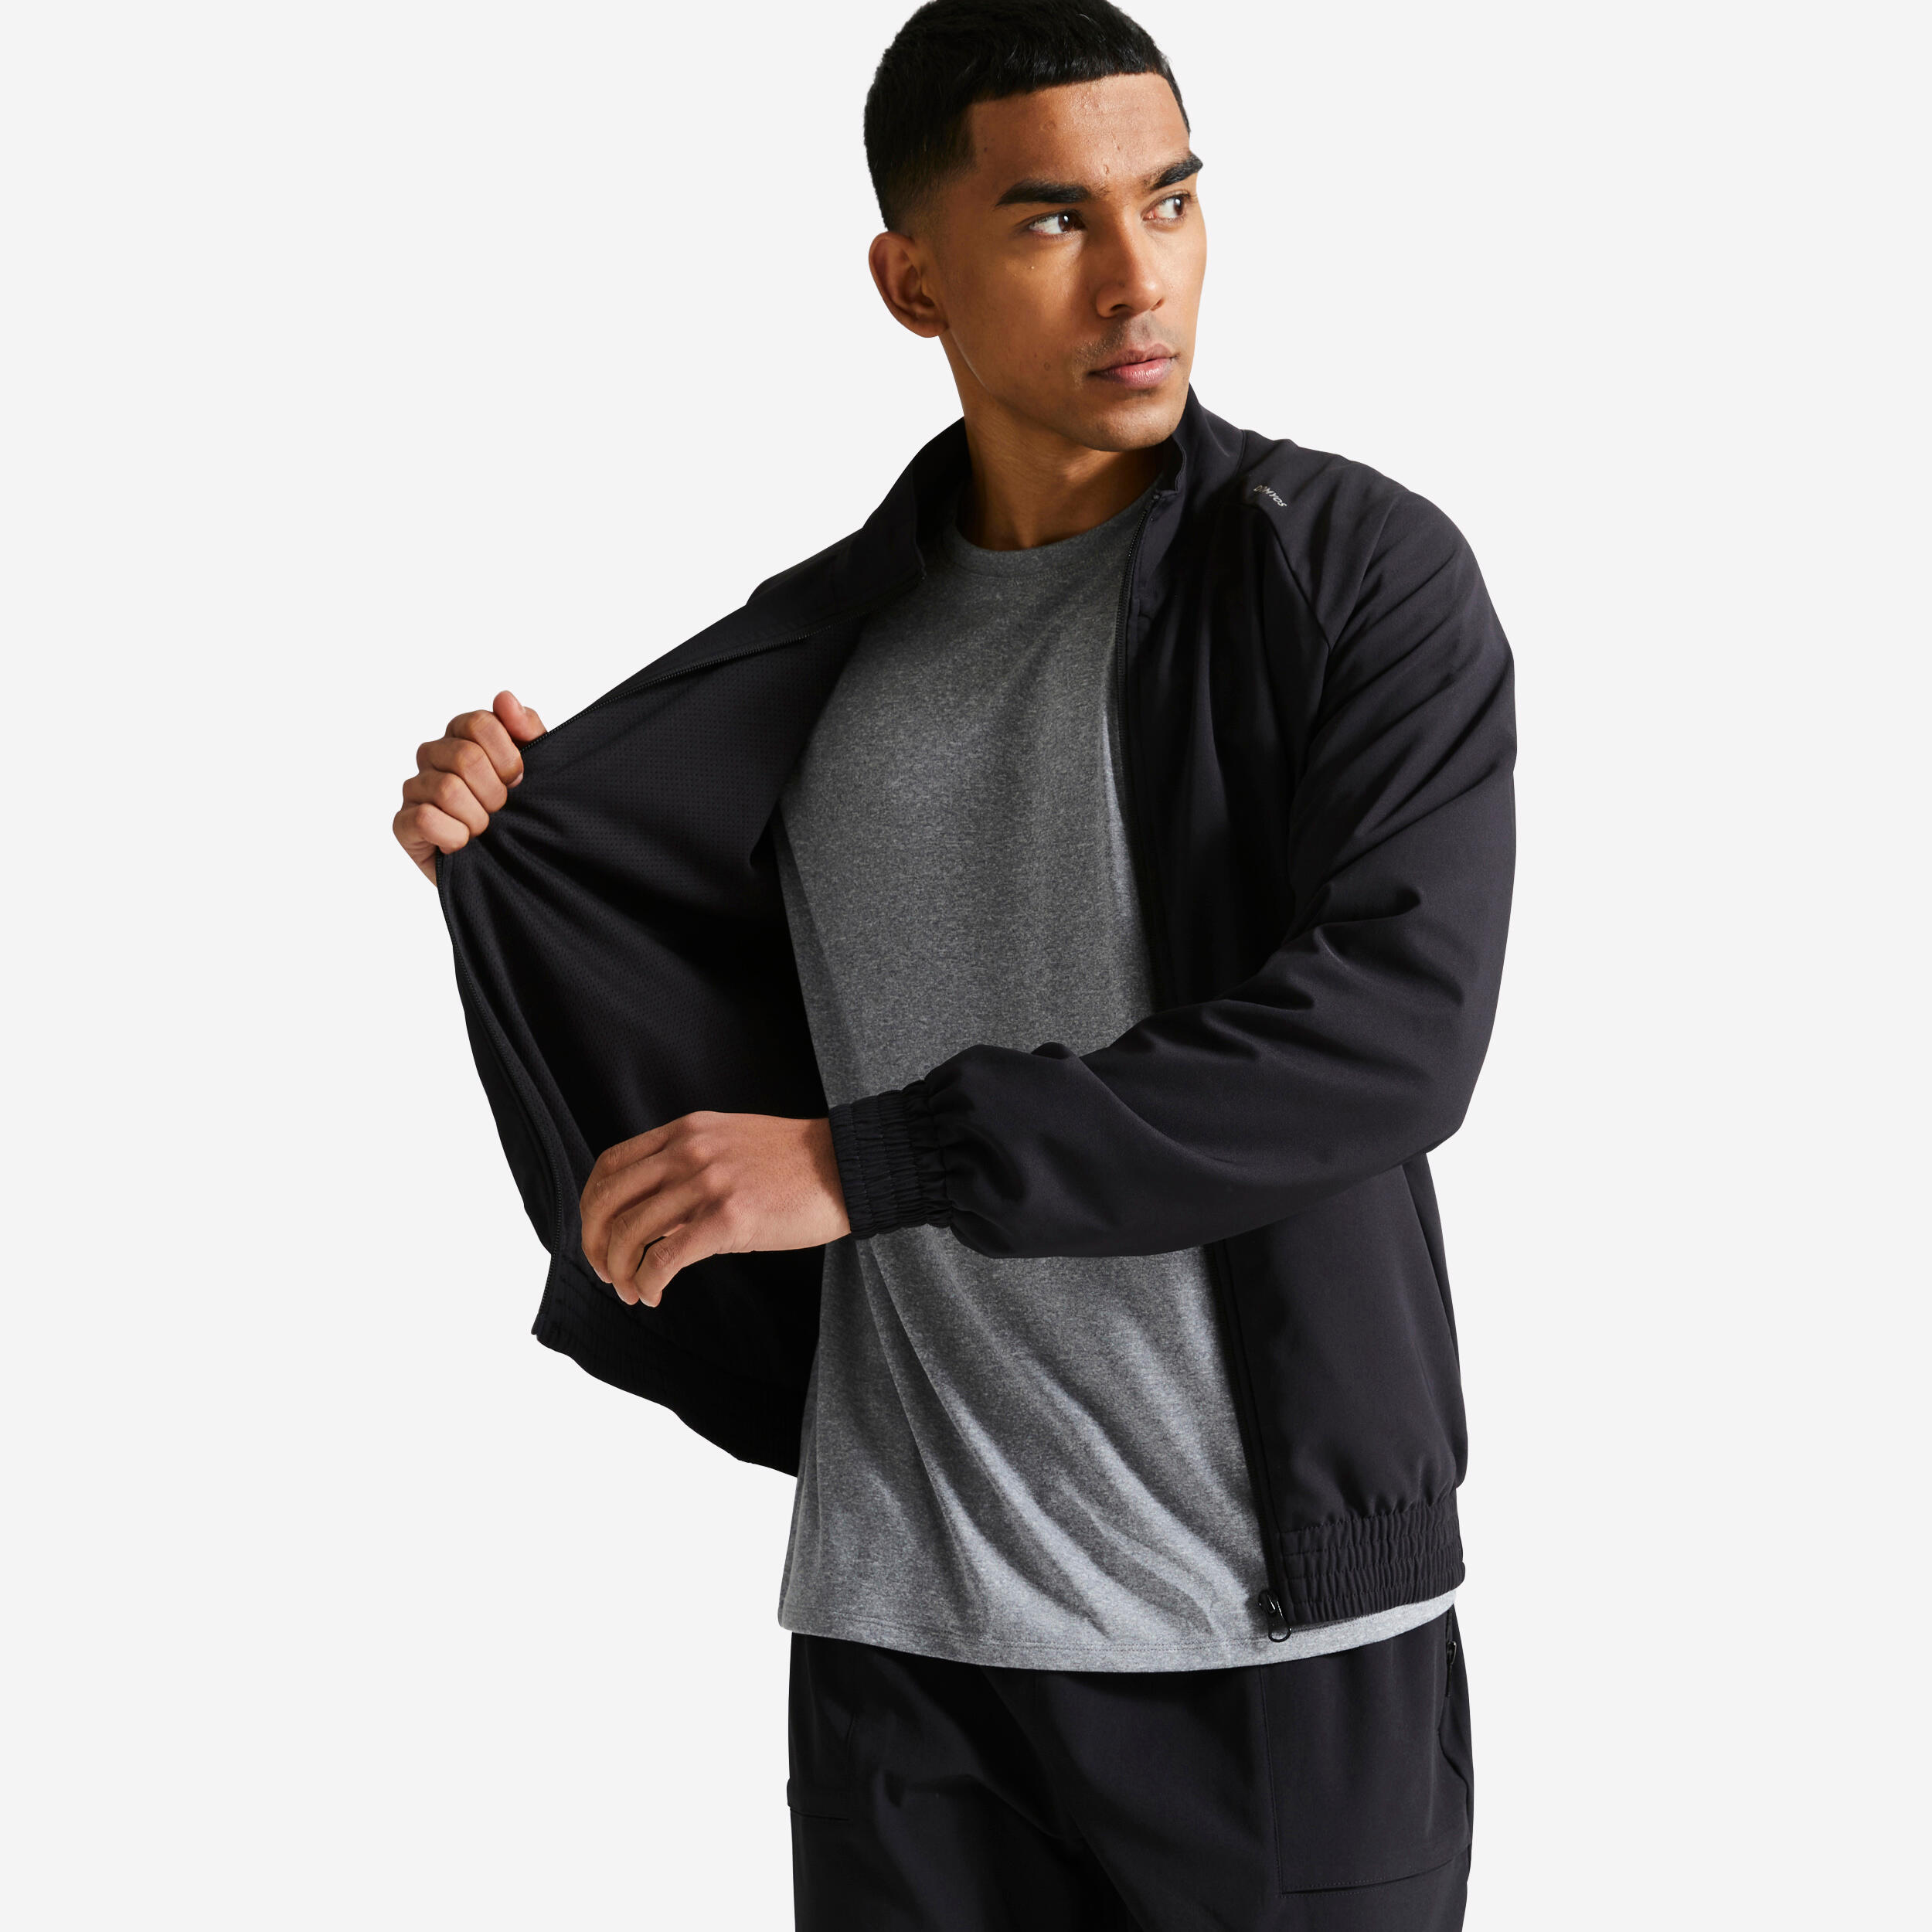 Buy Domyos by Decathlon Men Grey Insulator High Collar Fleecy Zipped  Fitness Training Hoodie at Amazon.in